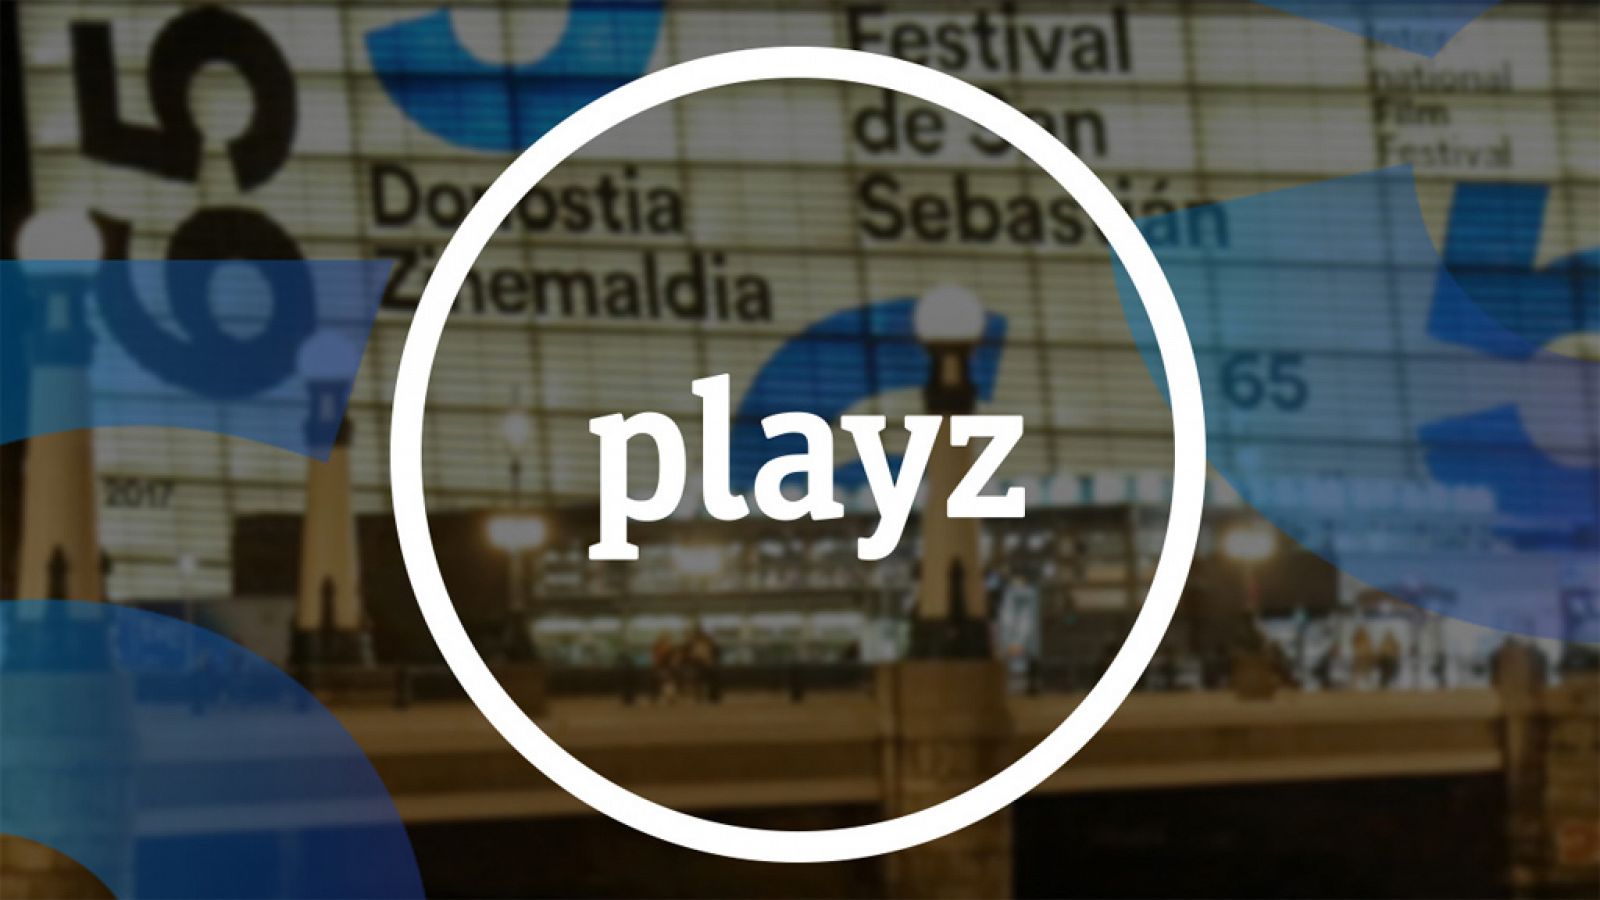 PlayZinemaldia - Llega PlayZinemaldia,  el programa de RTVE.es sobre el Festival de San Sebastián